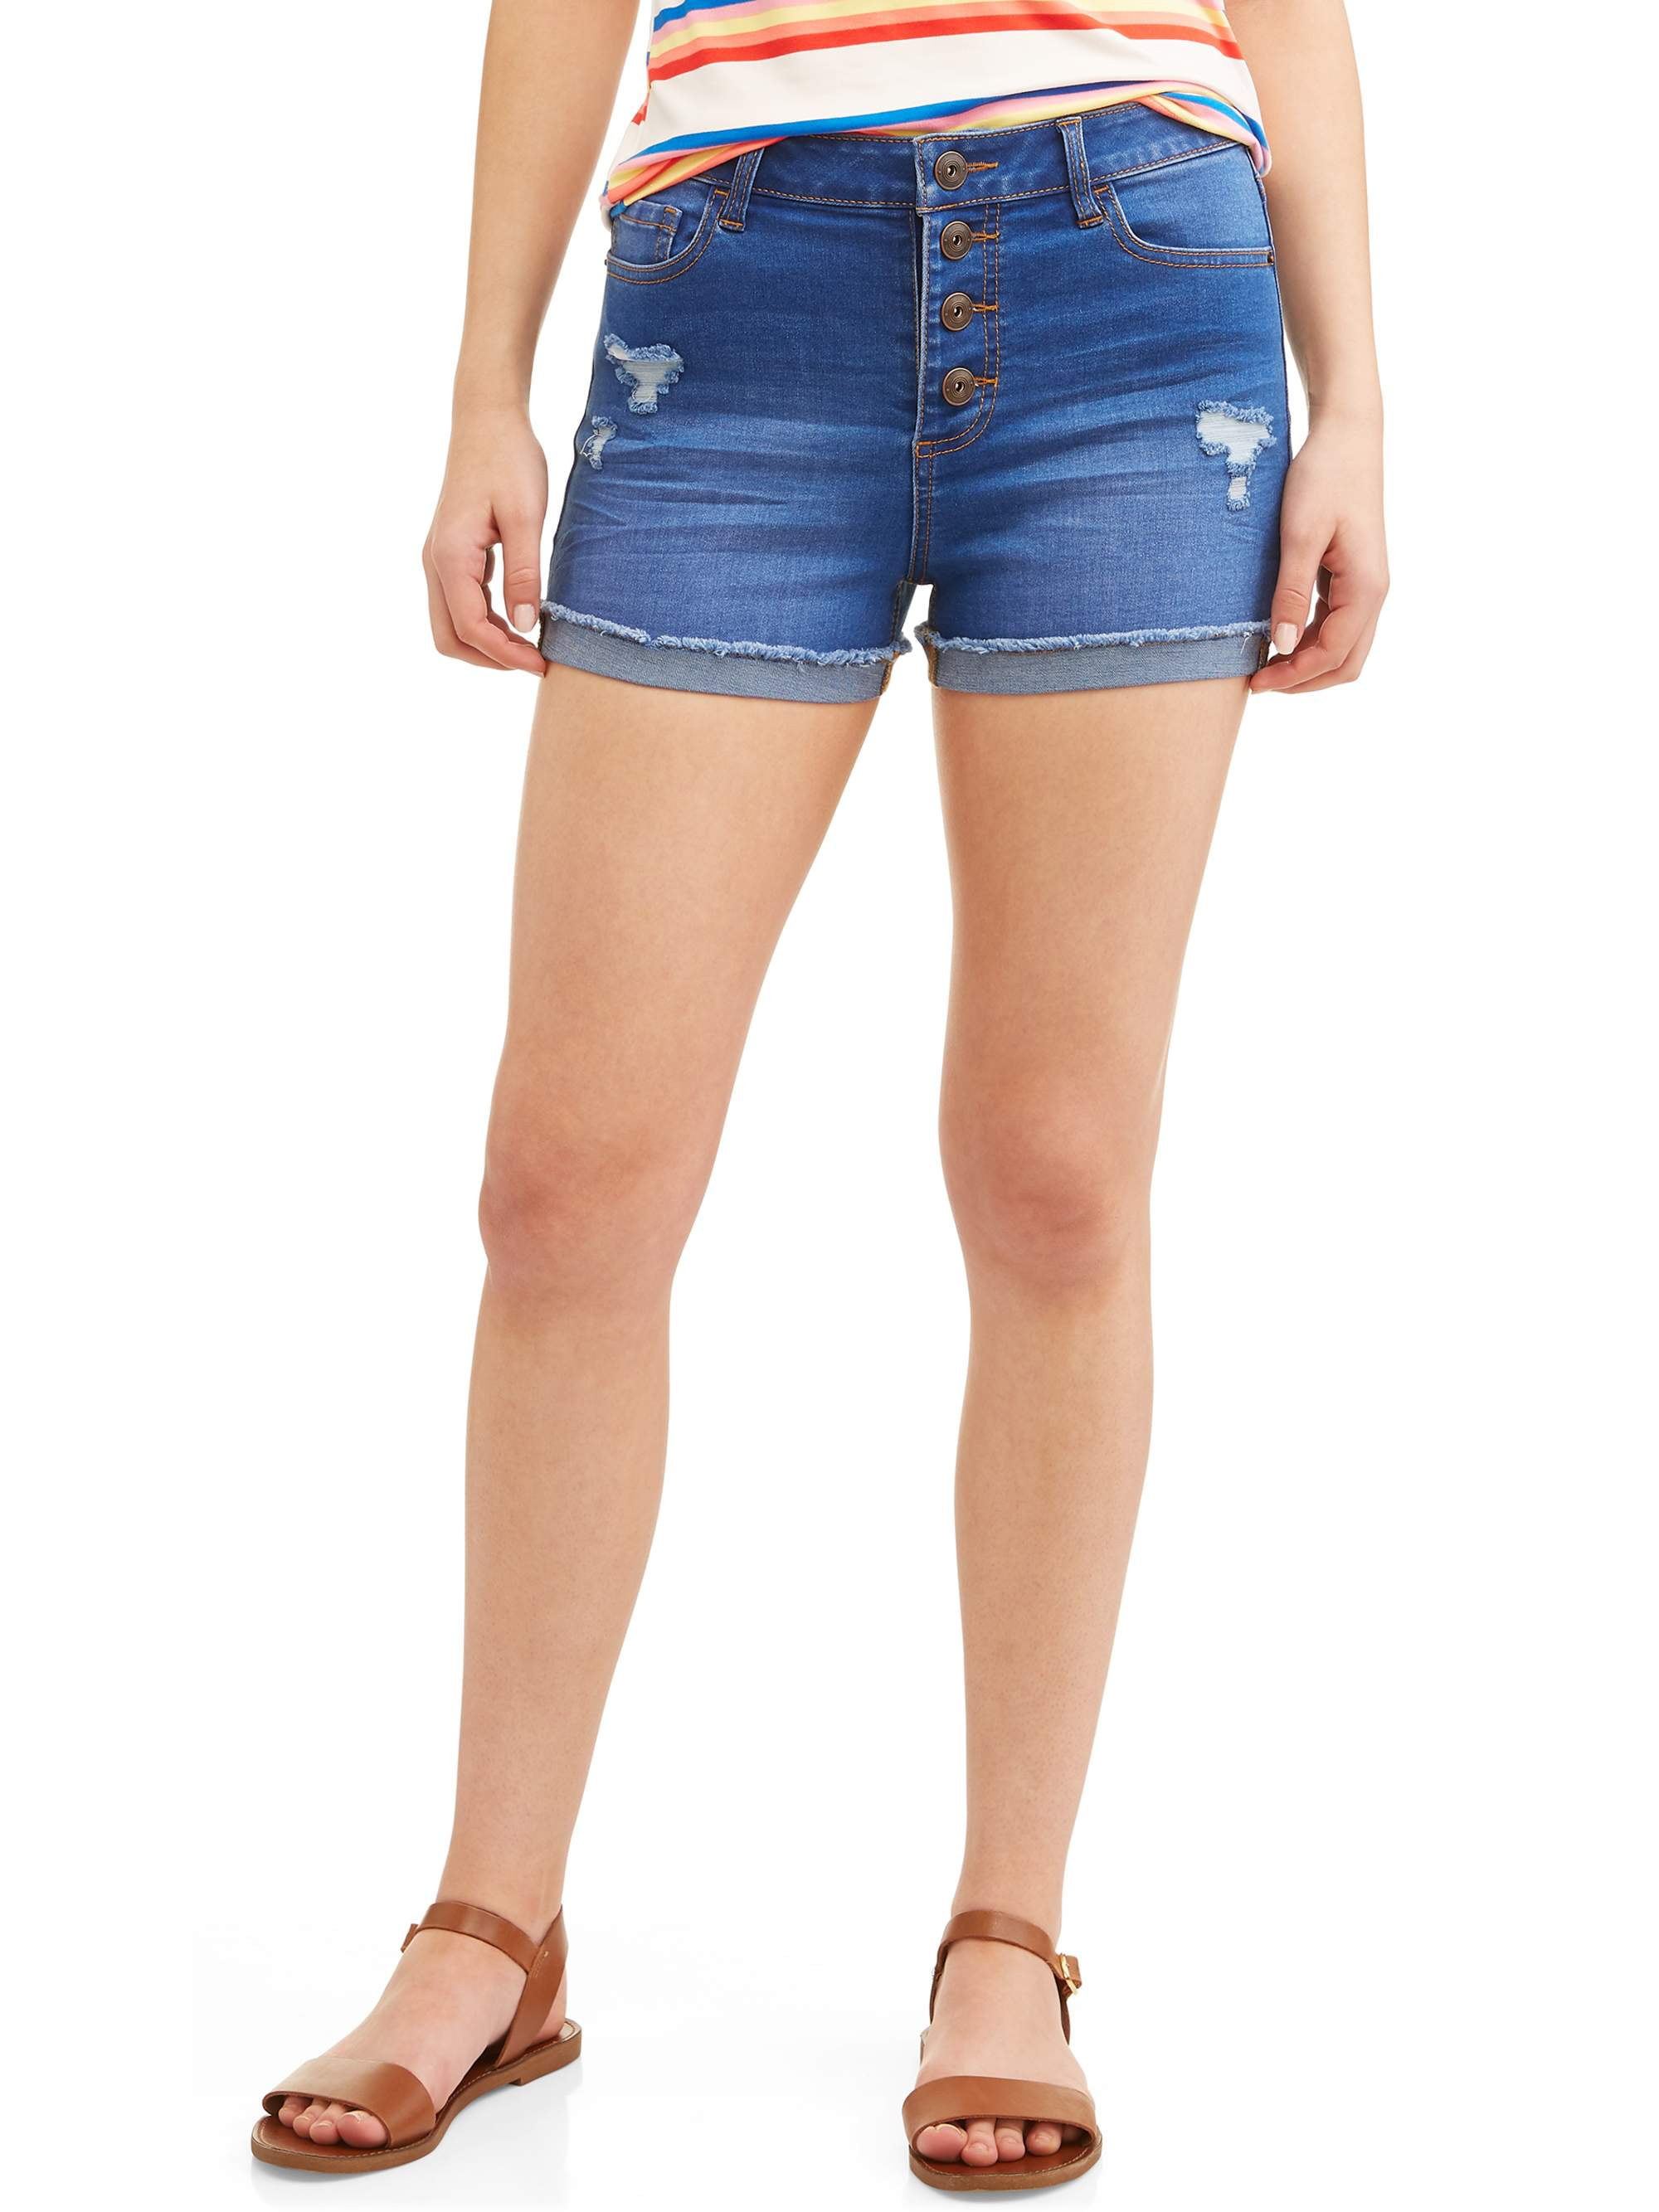 walmart blue jean shorts